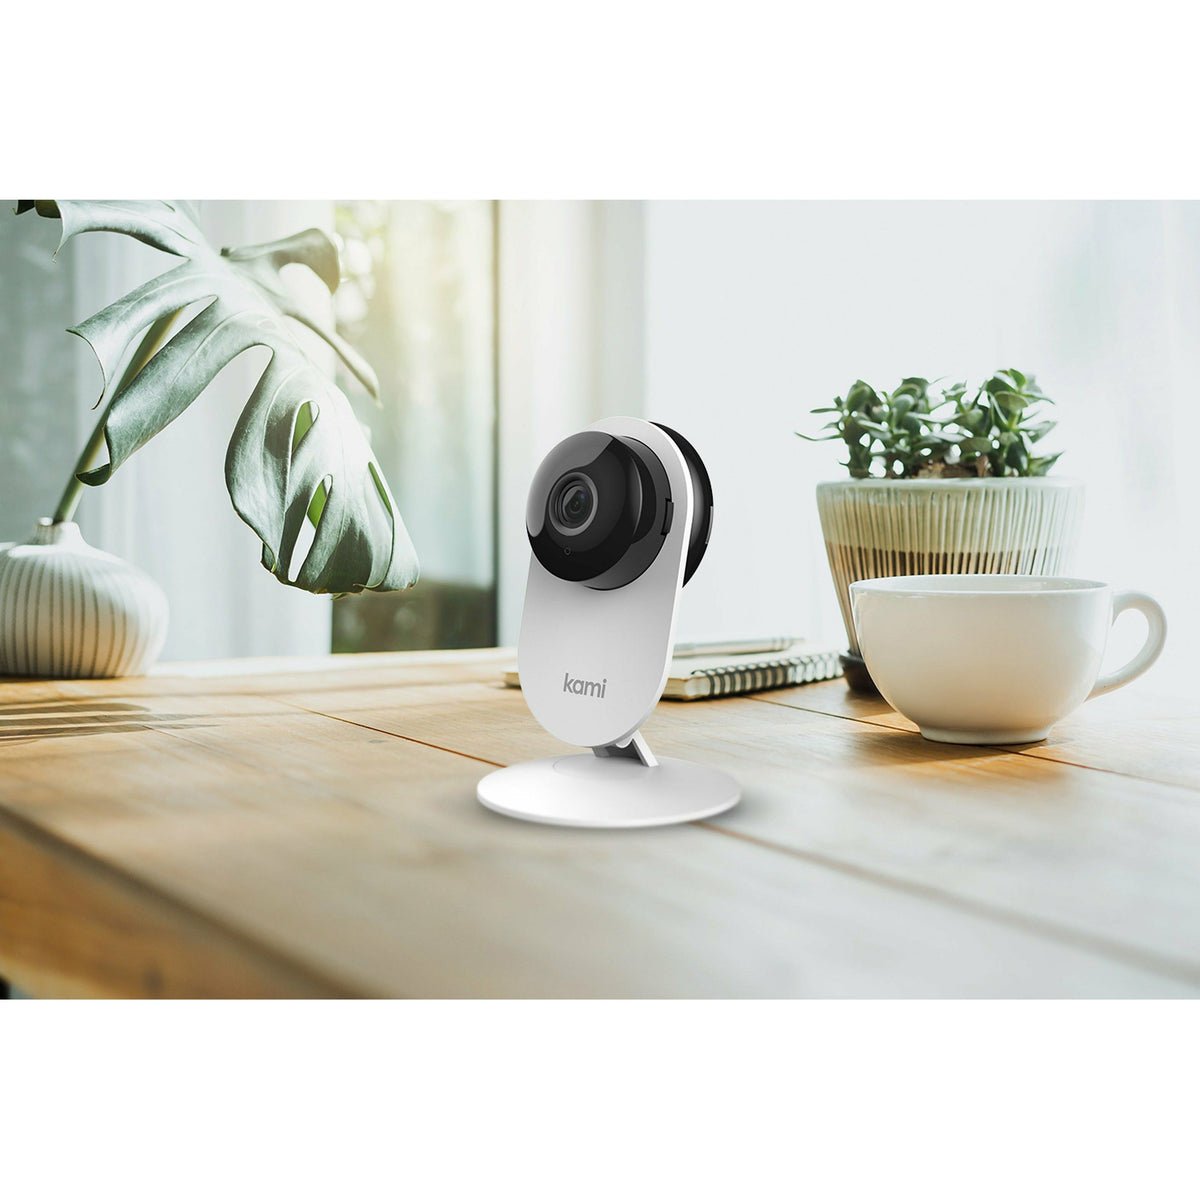 Kami Mini Fixed Indoor Security Camera - White | KAMI-Y28-YYS2919 (7558571098300)